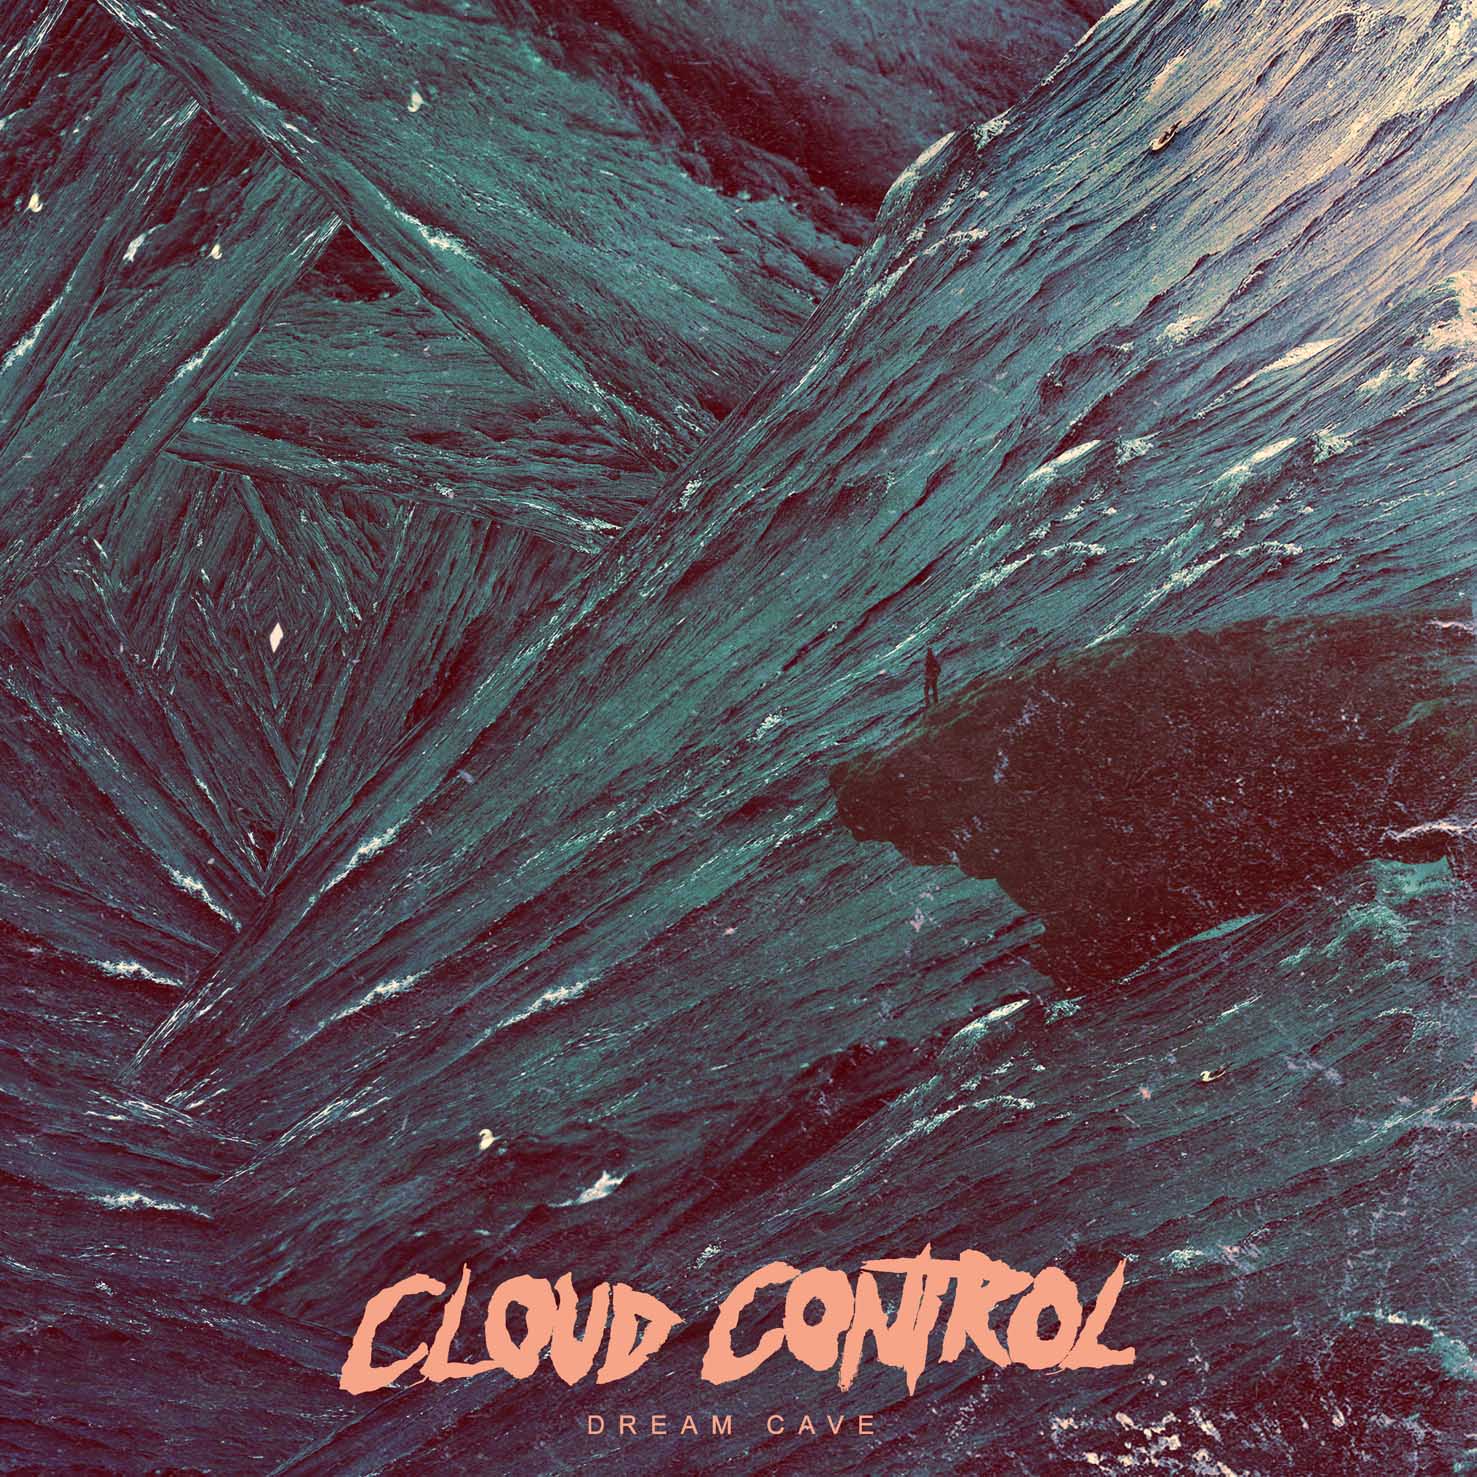 Cloud Control – “Dream Cave” Review